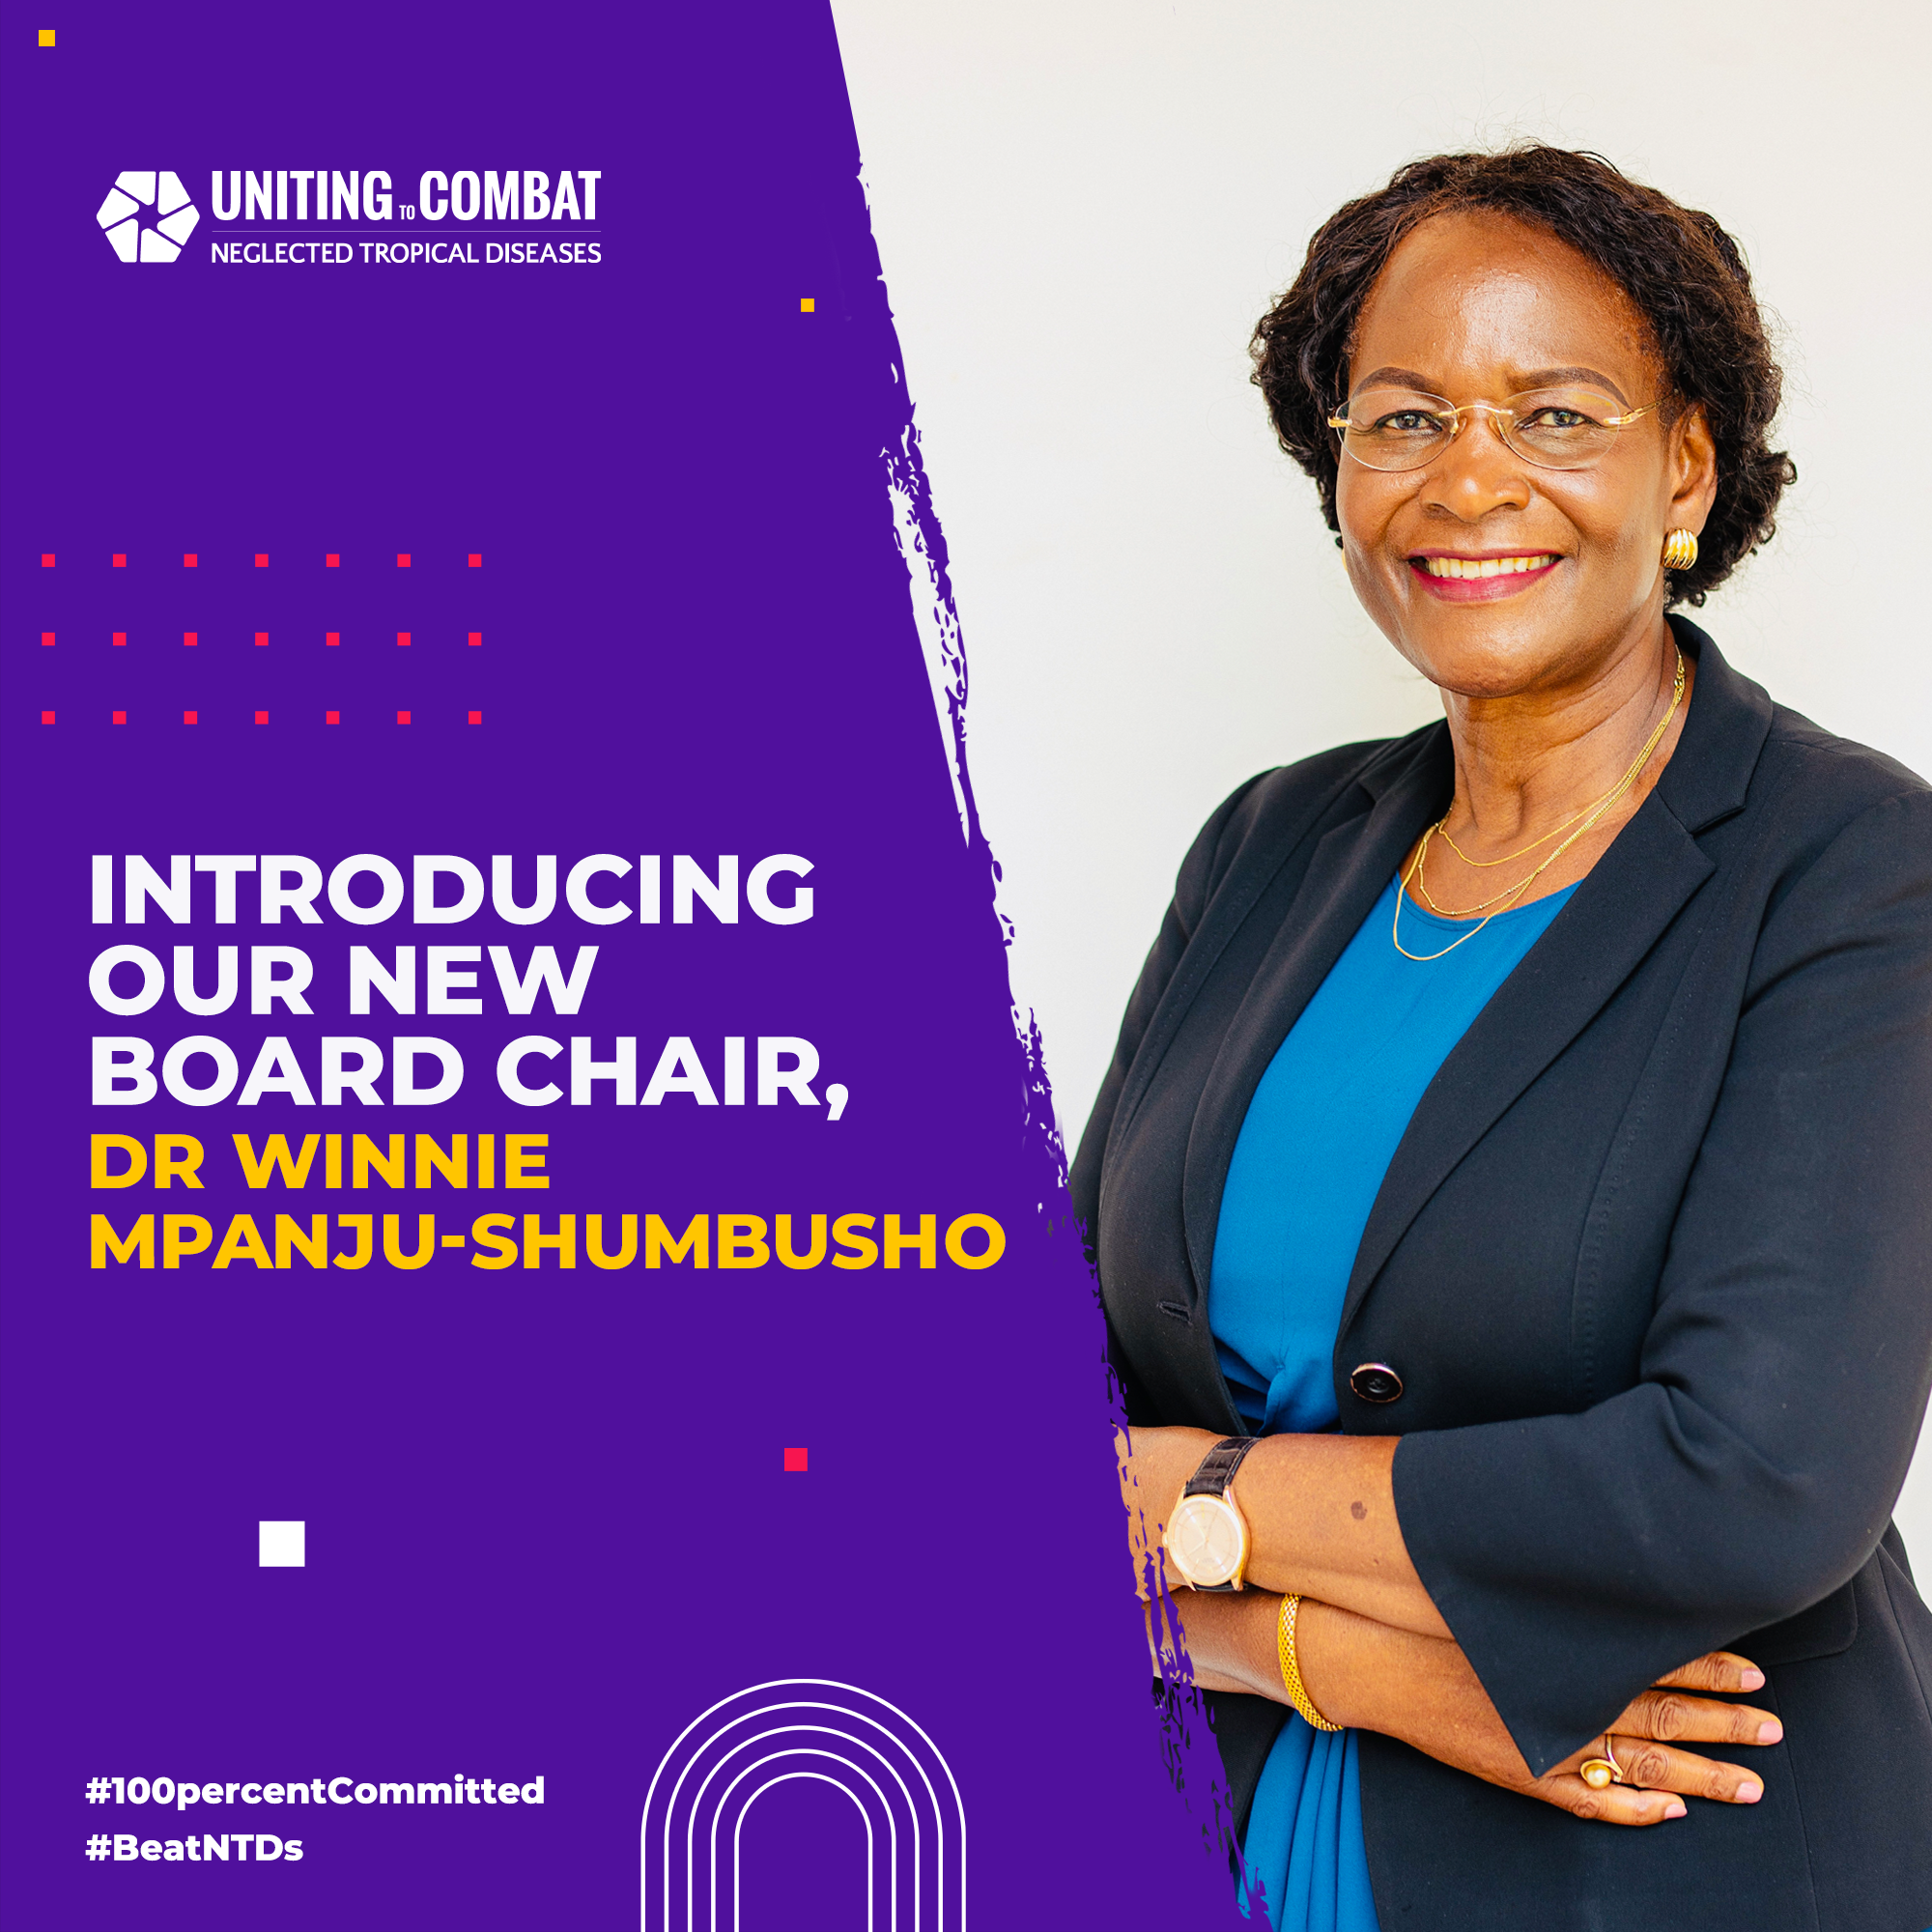 Introducing our new Board Chair, Dr Winnie Mpanju-Shumbusho